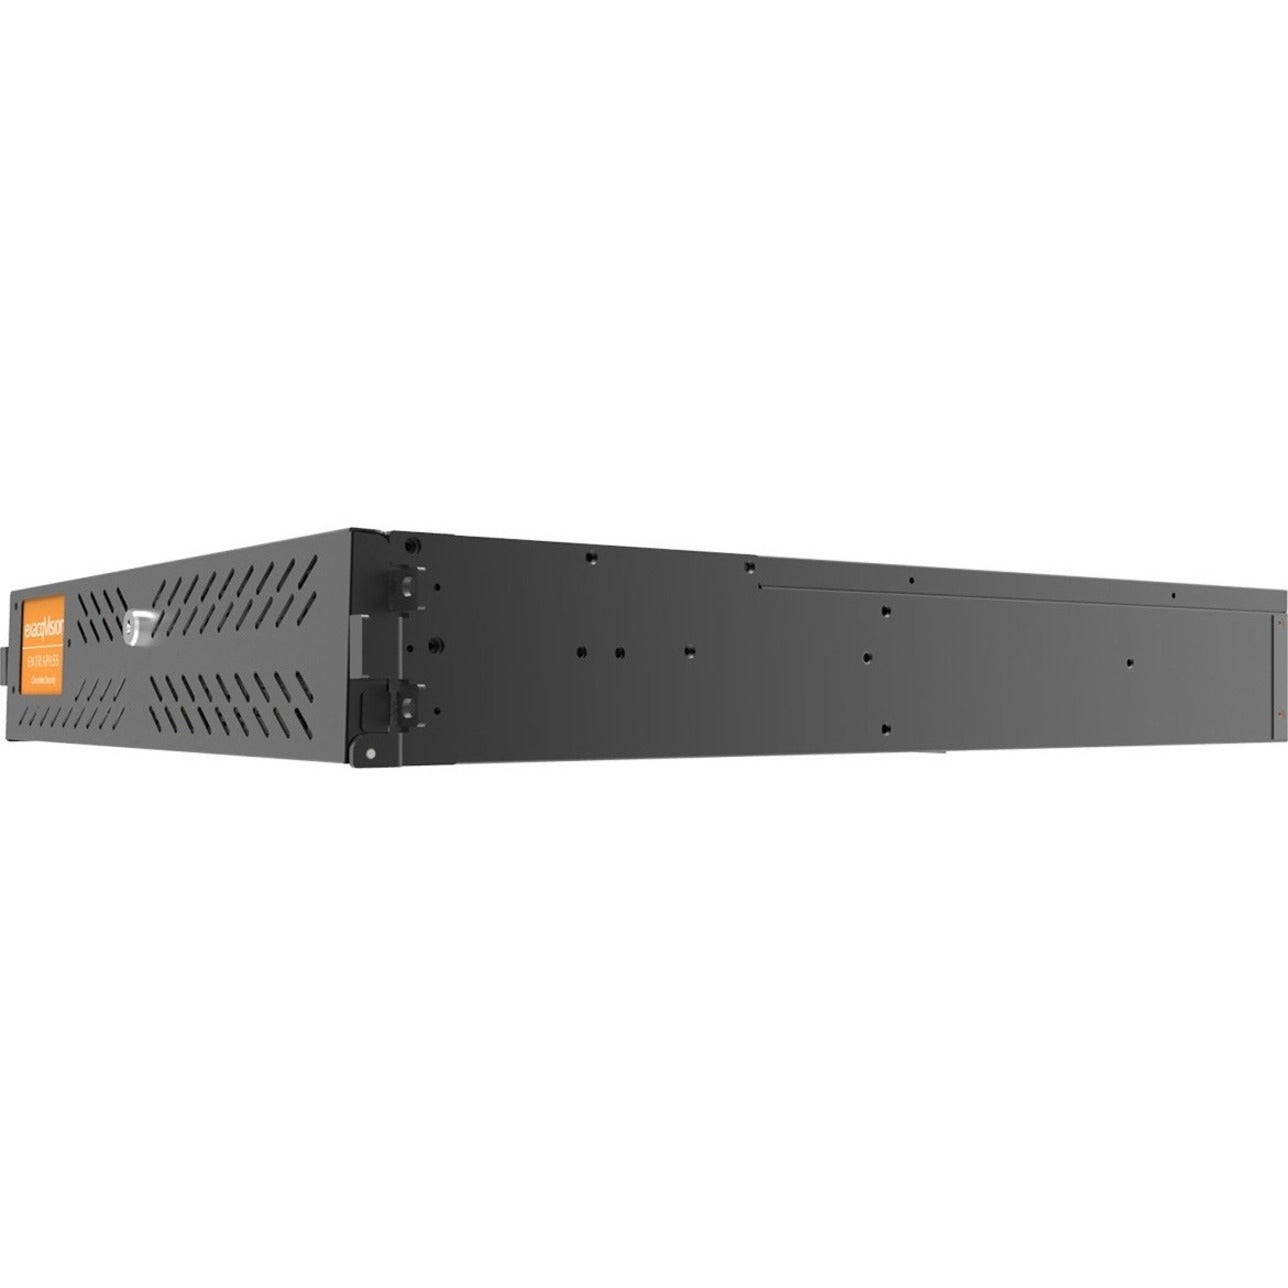 Exacq exacqVision Z Network Surveillance Server - 16 TB HDD